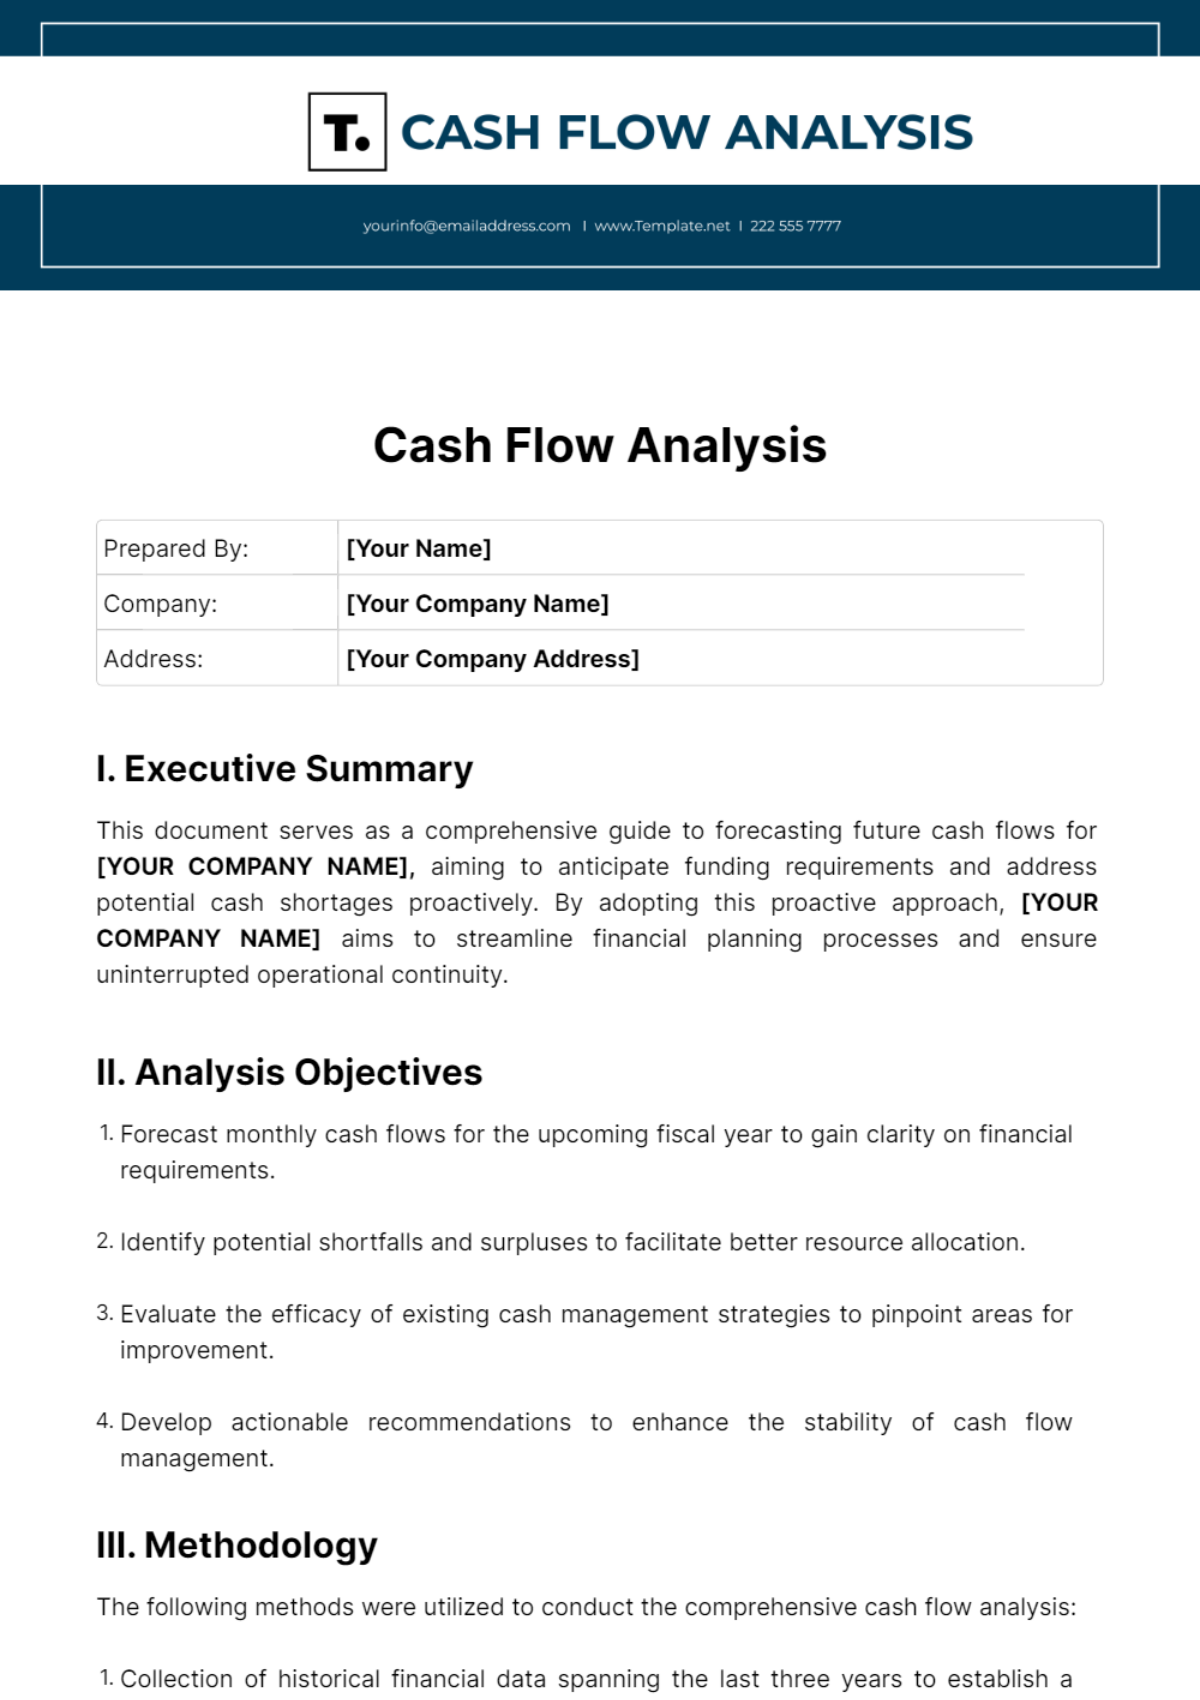 Cash Flow Analysis Template